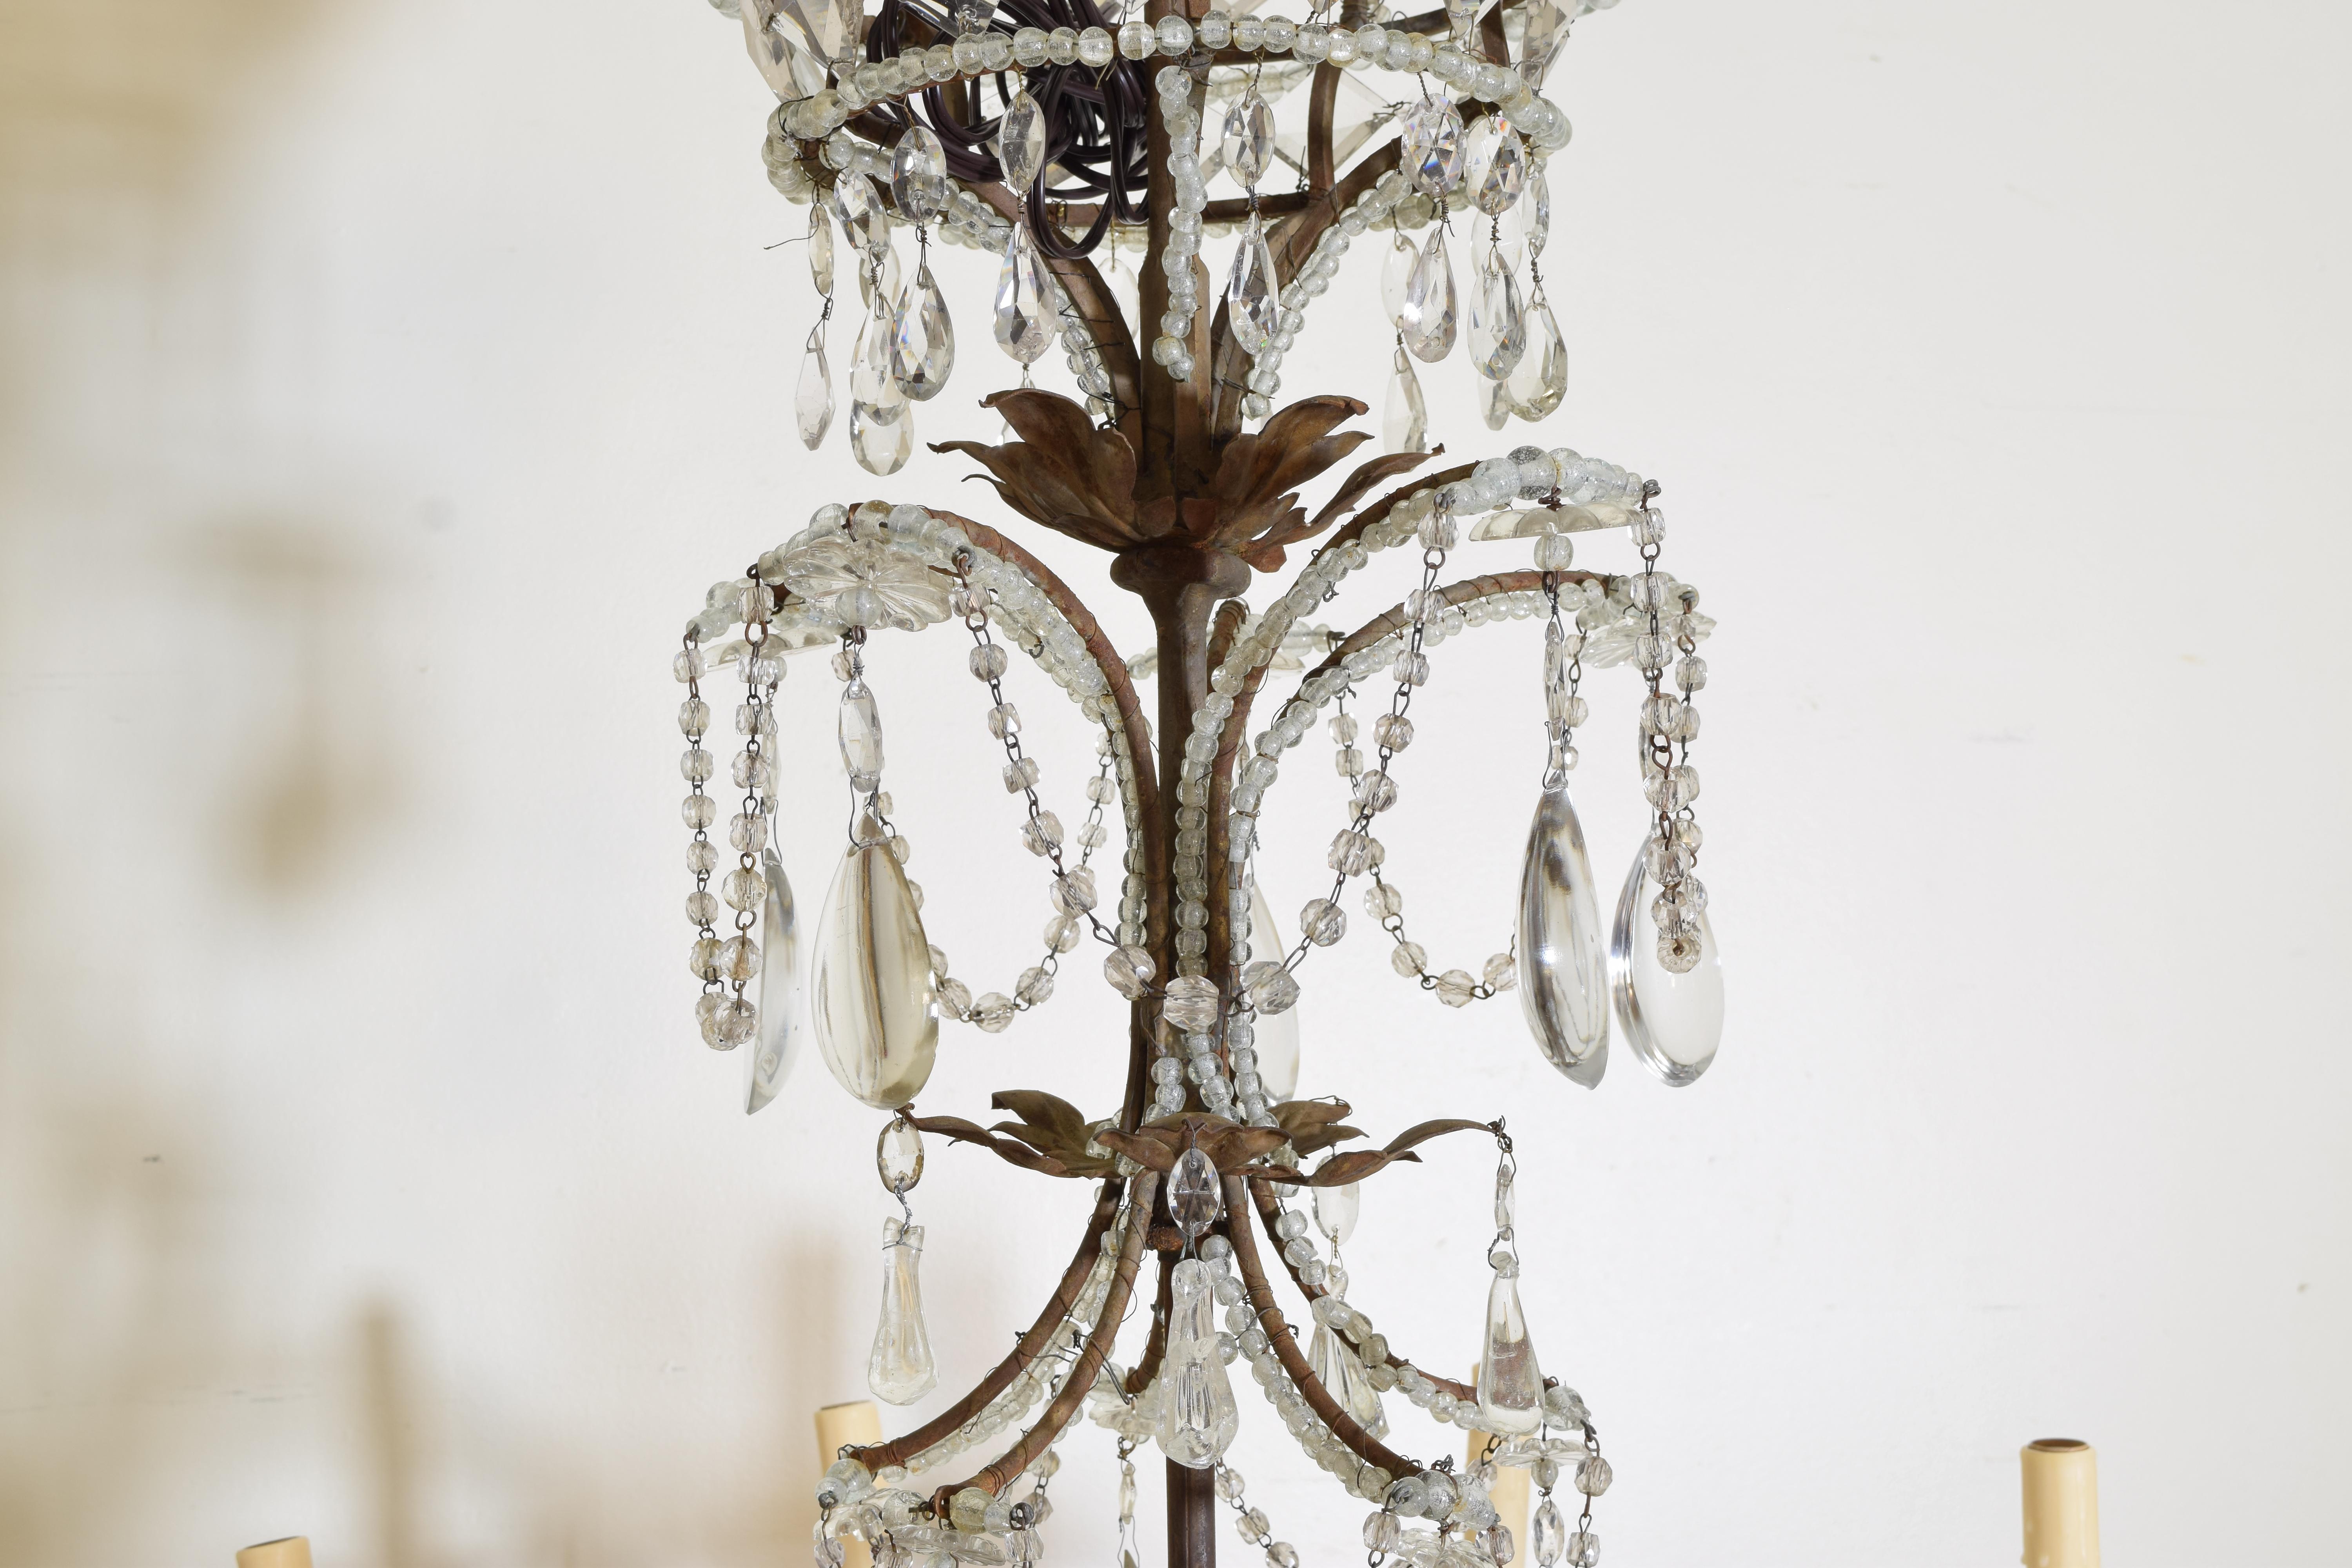 Mid-19th Century Italian, Piemontese, Rococo Revival Period Iron and Glass 10-Light Chandelier